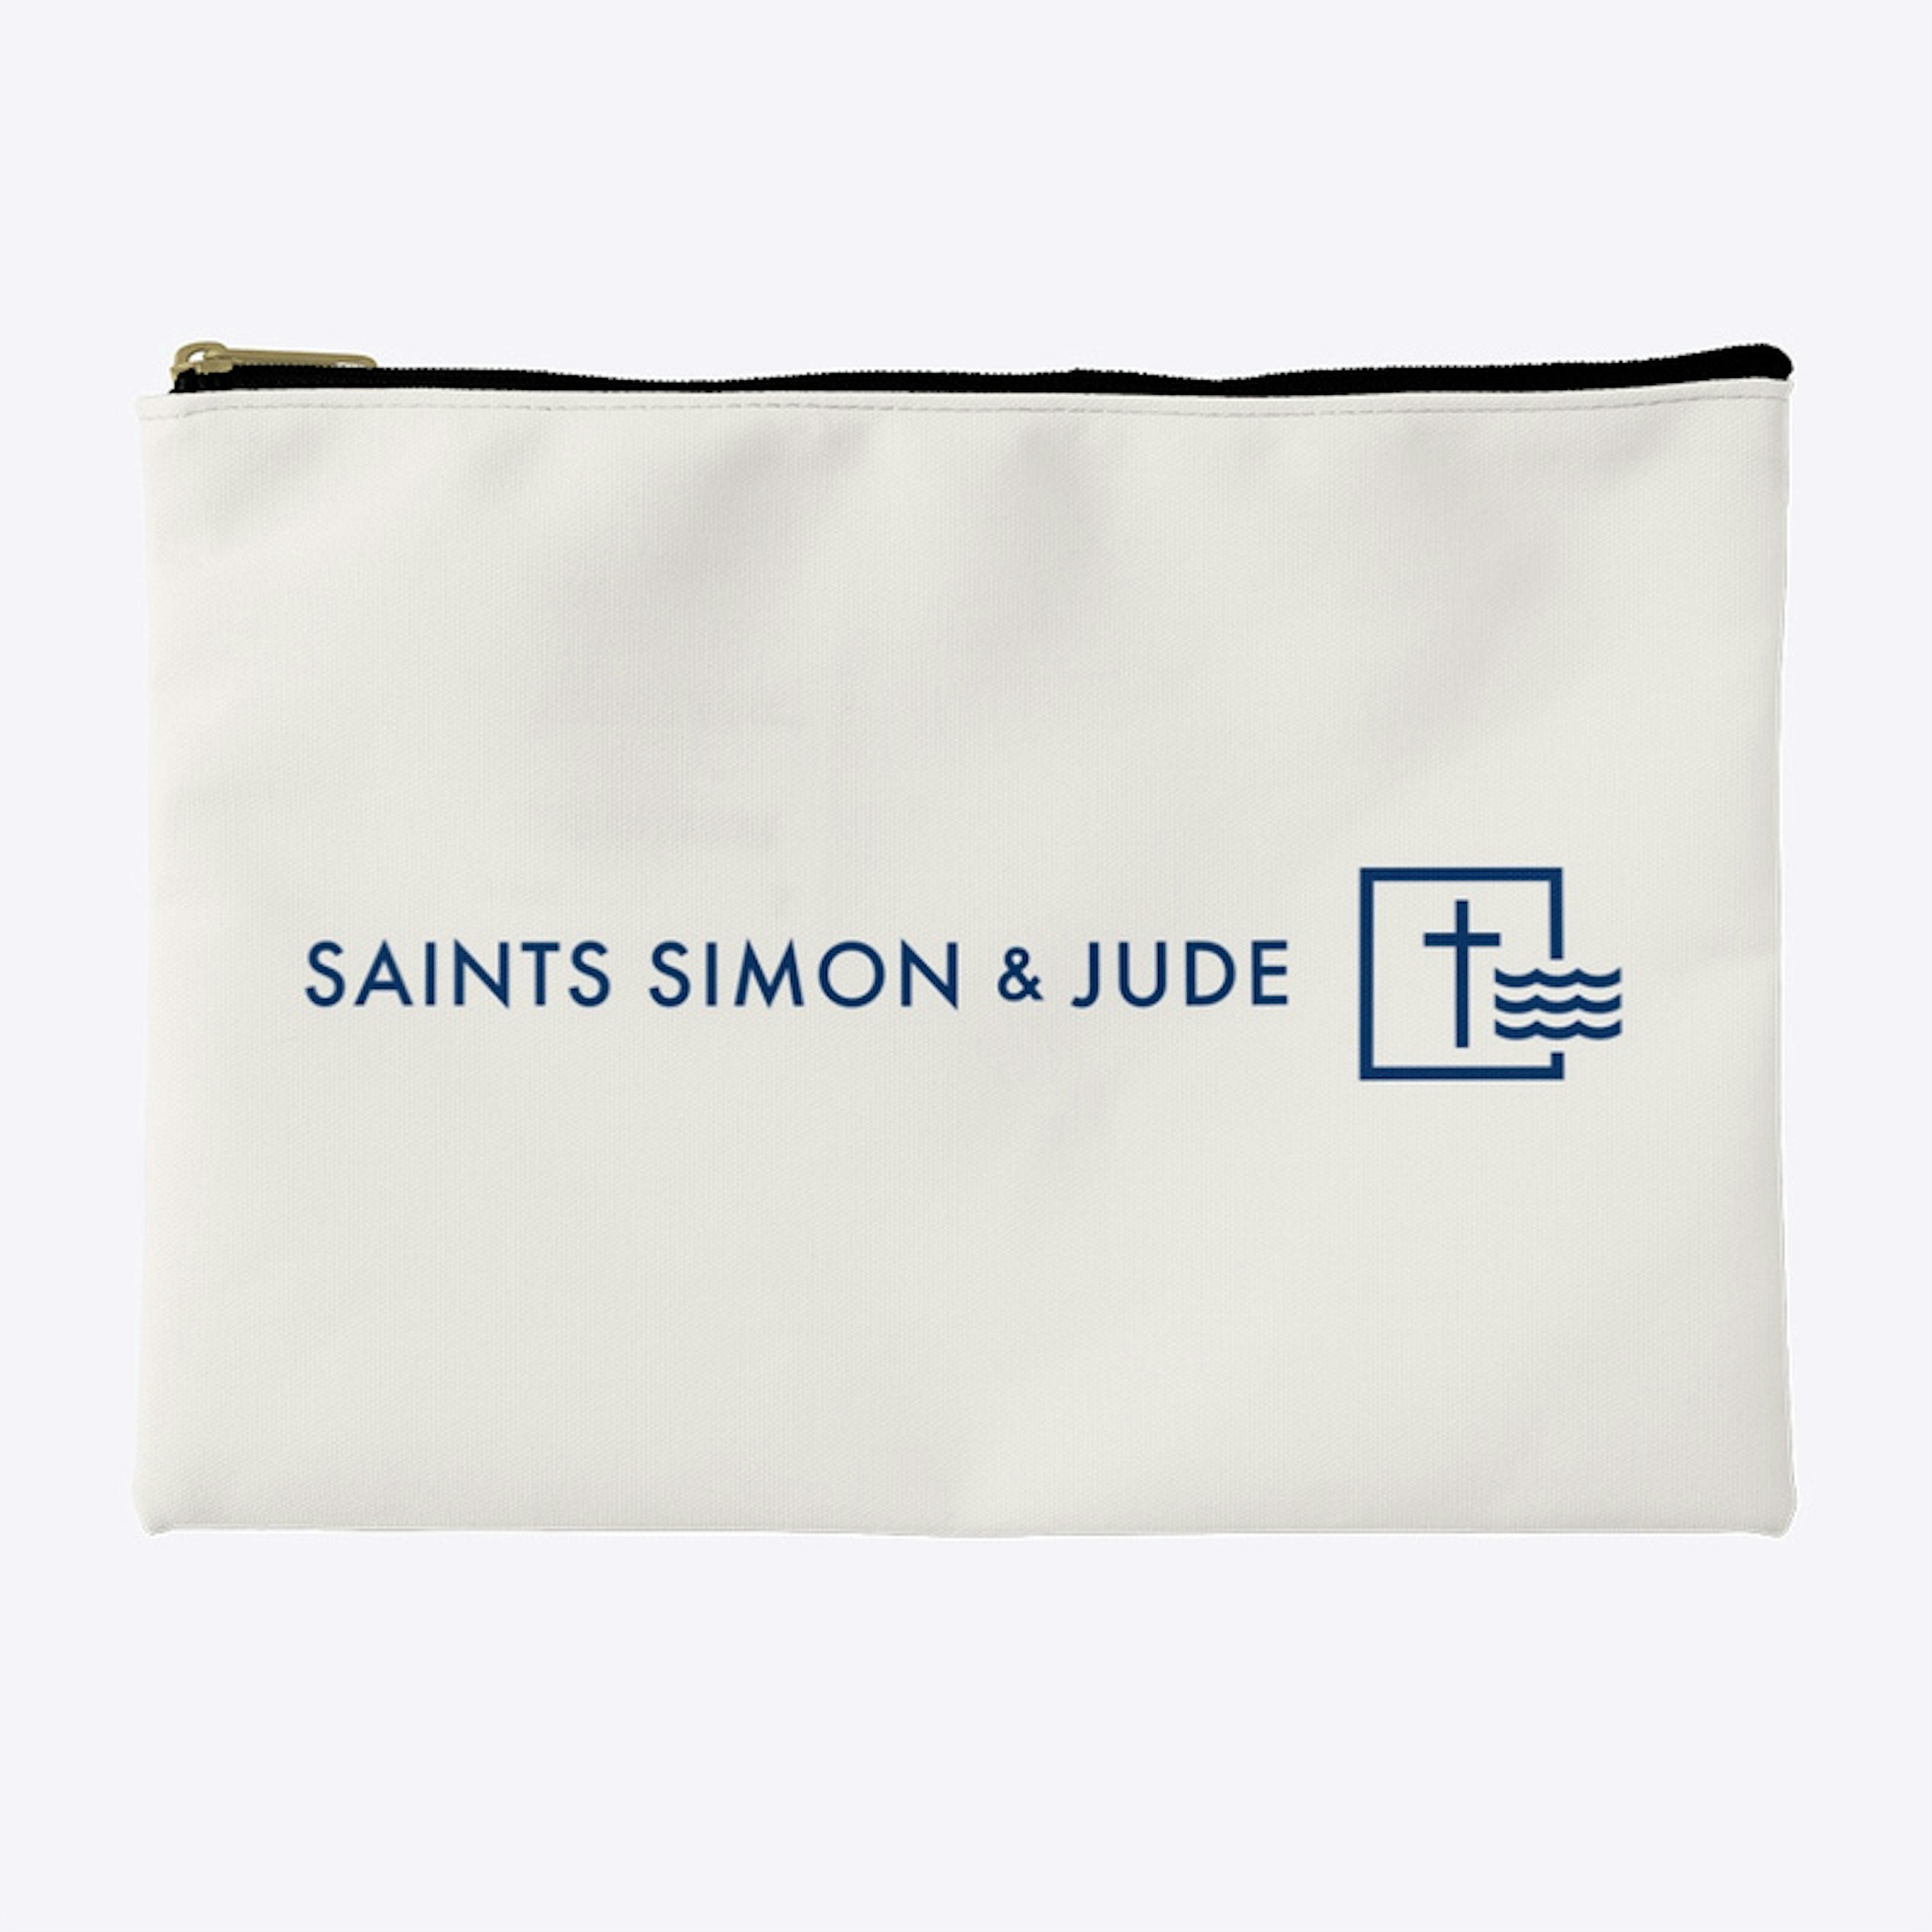 Saints Simon & Jude